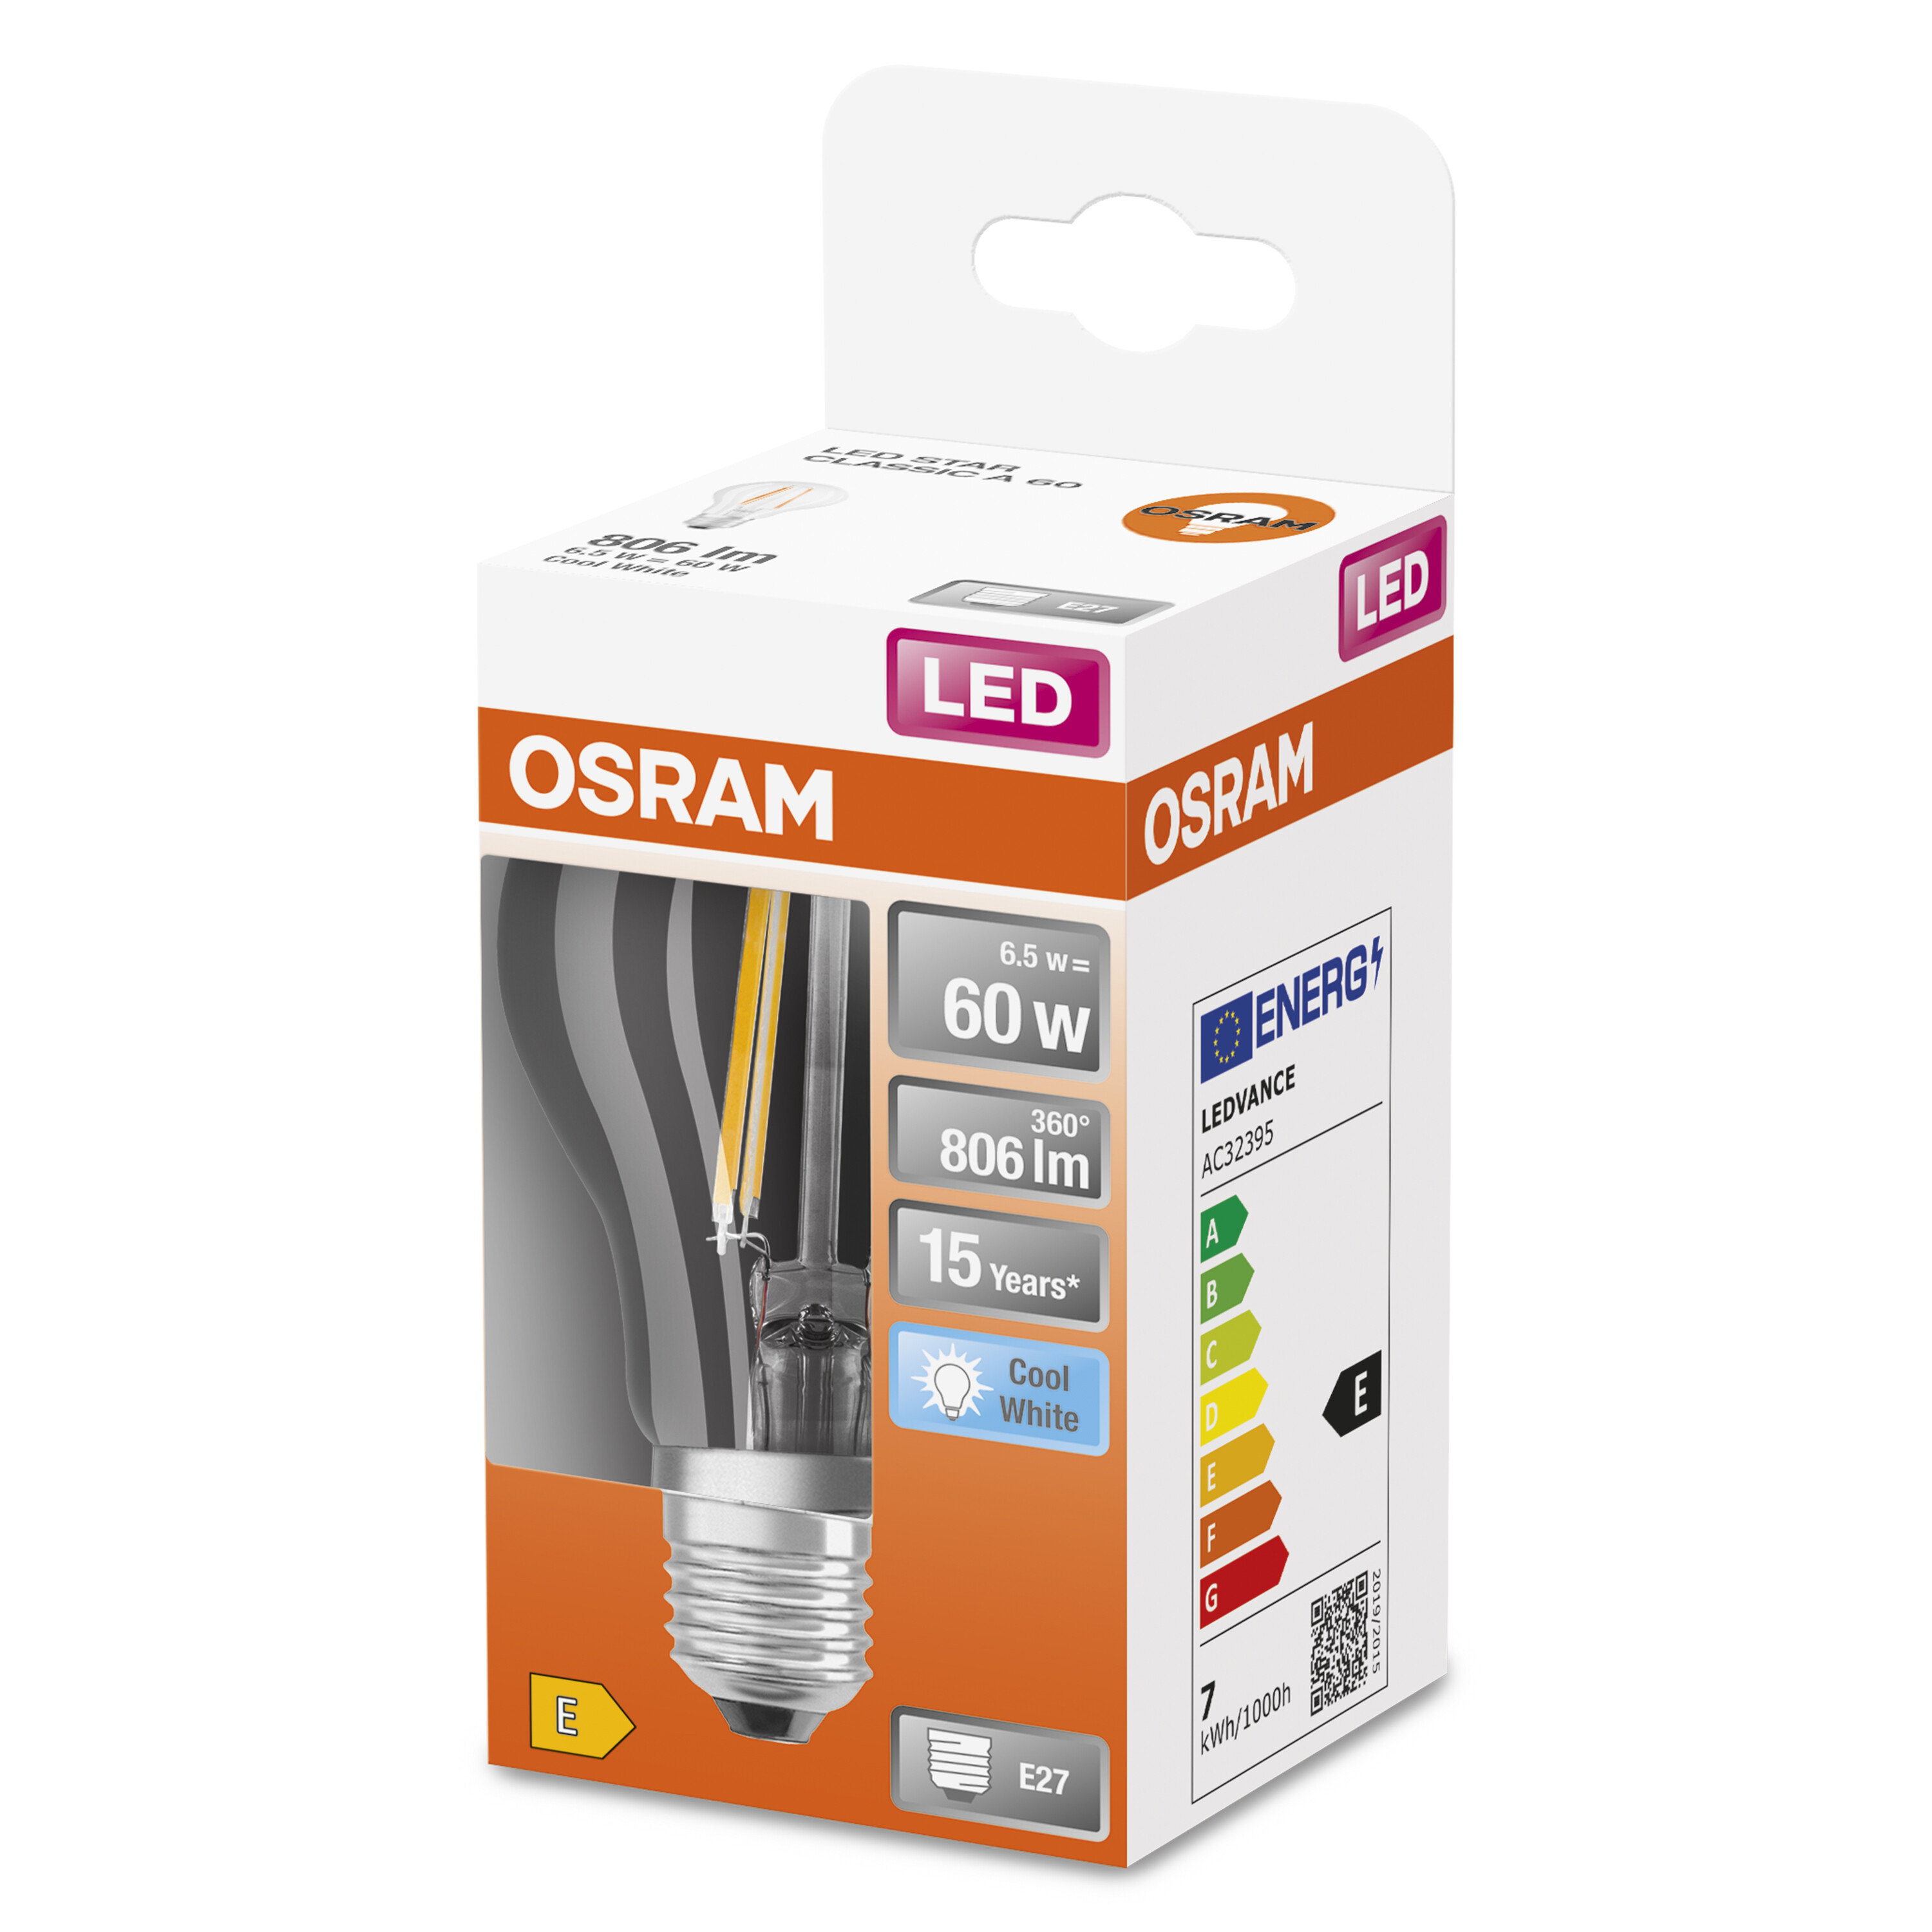 OSRAM  LED Retrofit CLASSIC LED Kaltweiß Lampe 806 Lumen A